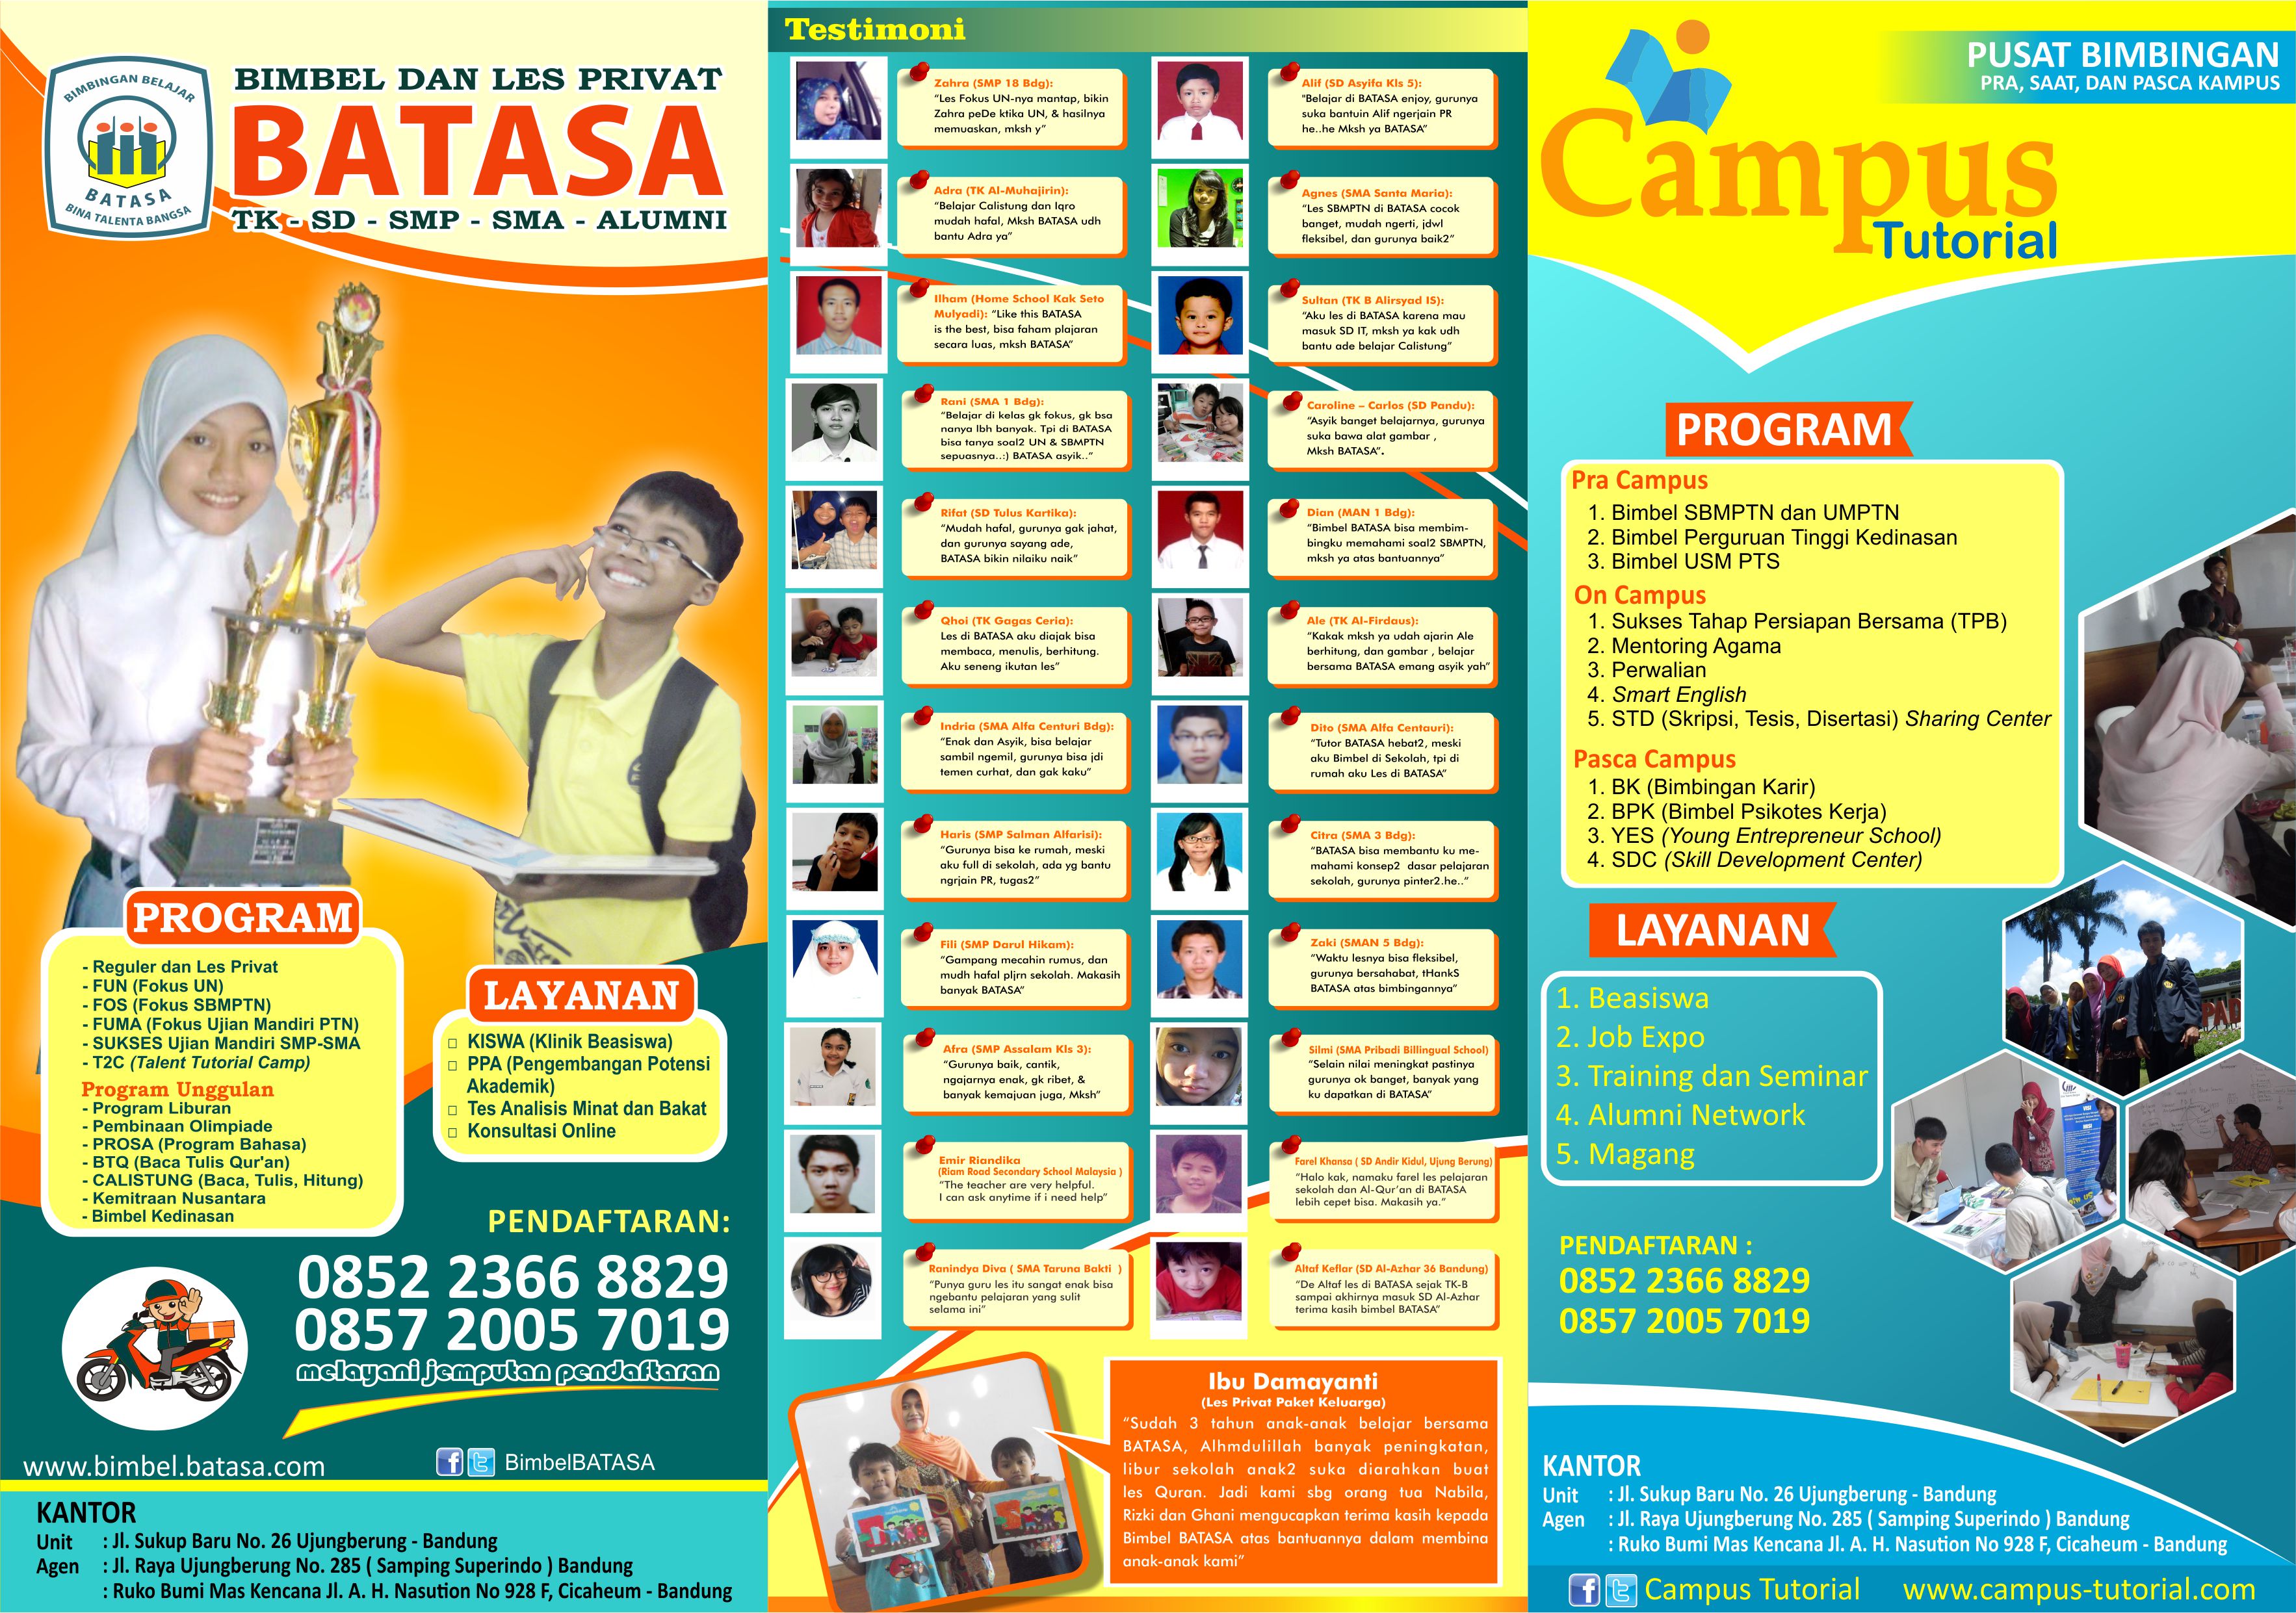 Pendaftaran Bimbel dan Privat BATASA 2018 – 2019 TK SD SMP SMA Alumni Les Privat Bandung Jabodetabek